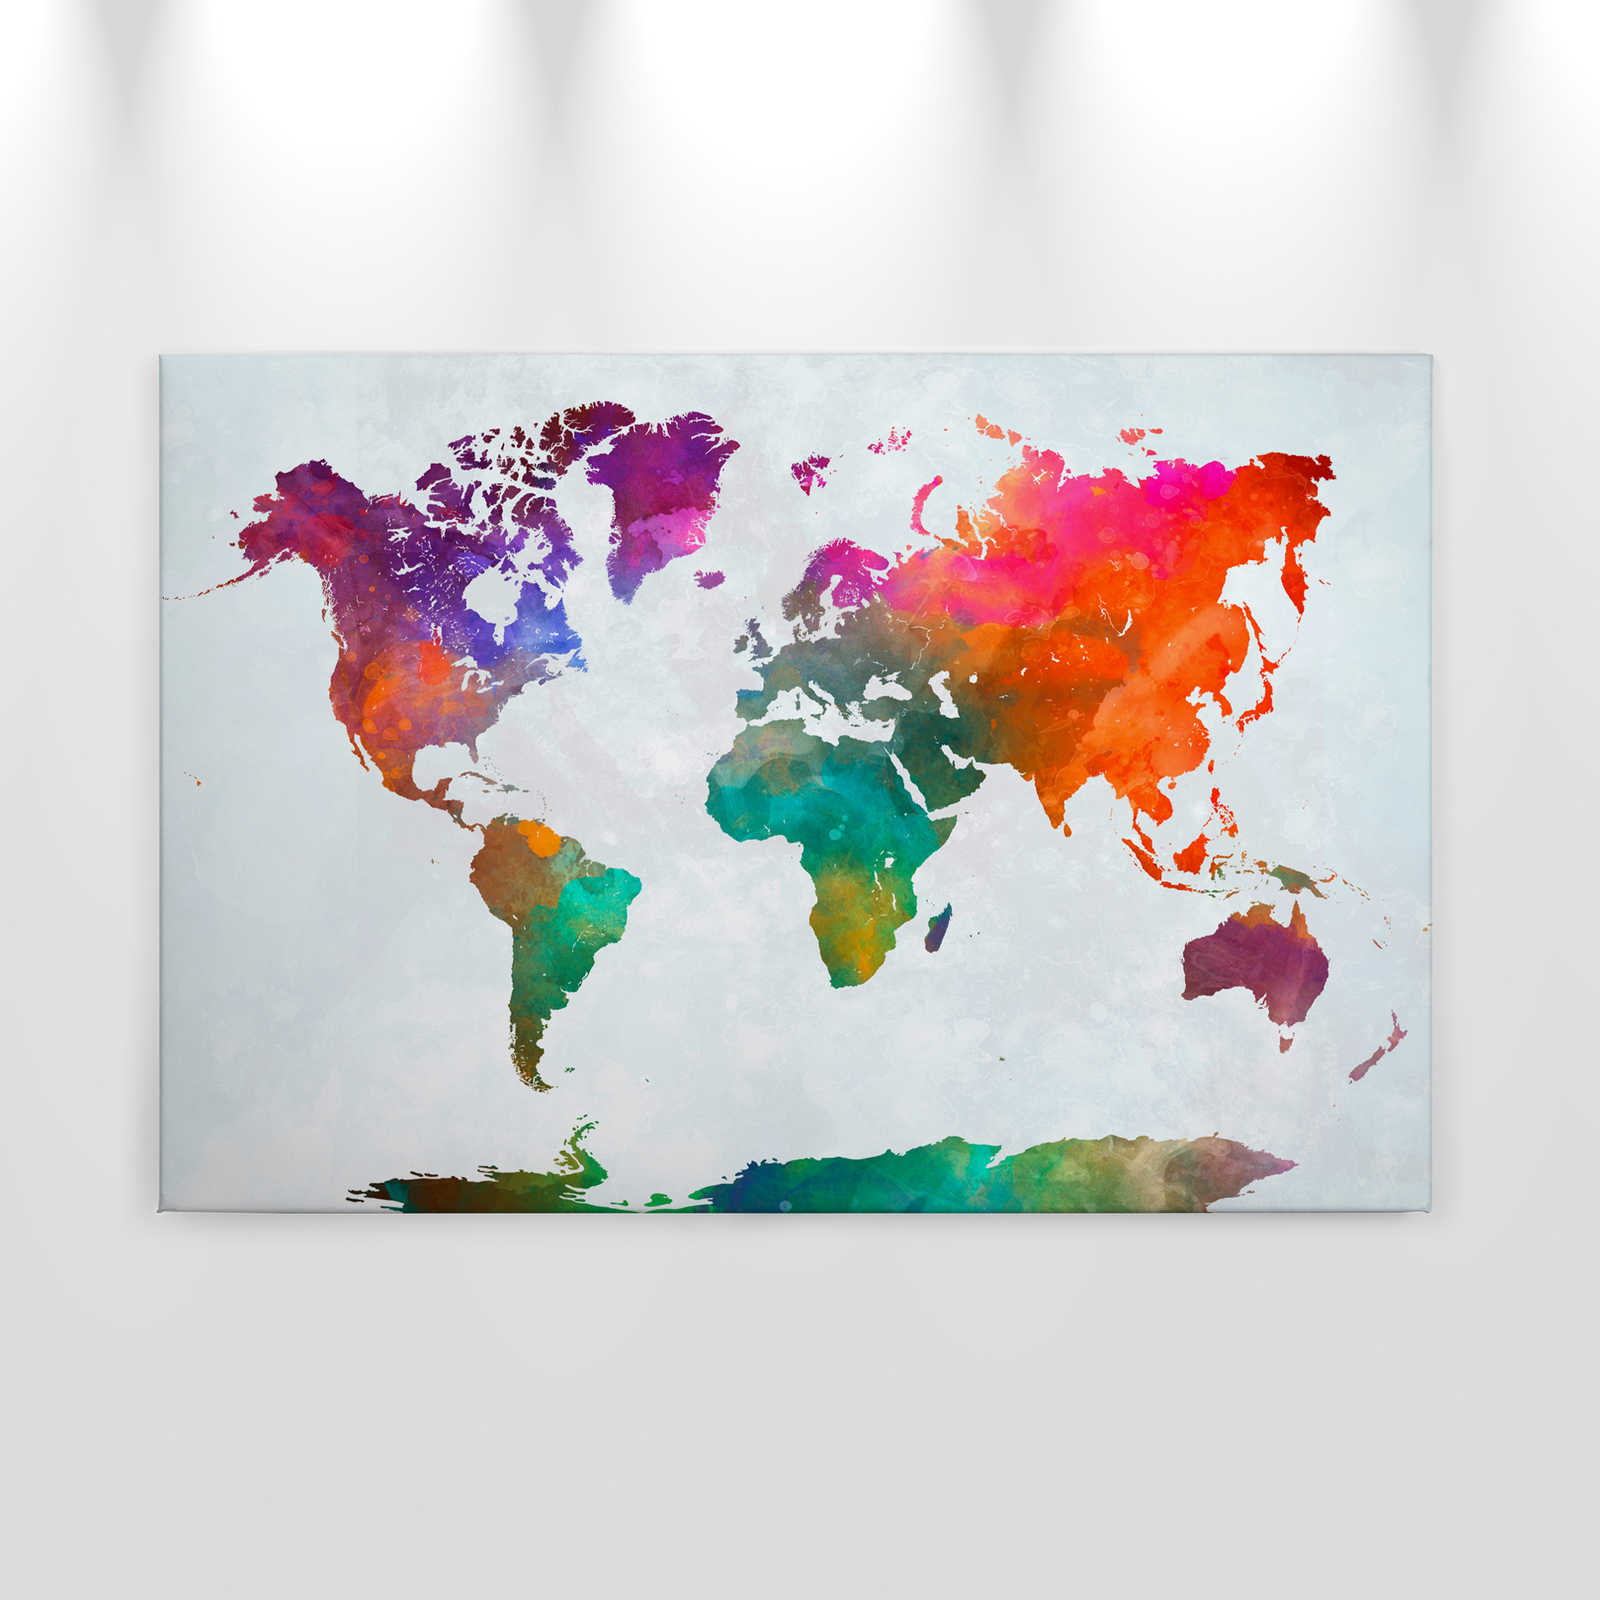             Mapamundi de colores en lienzo - 0,90 m x 0,60 m
        